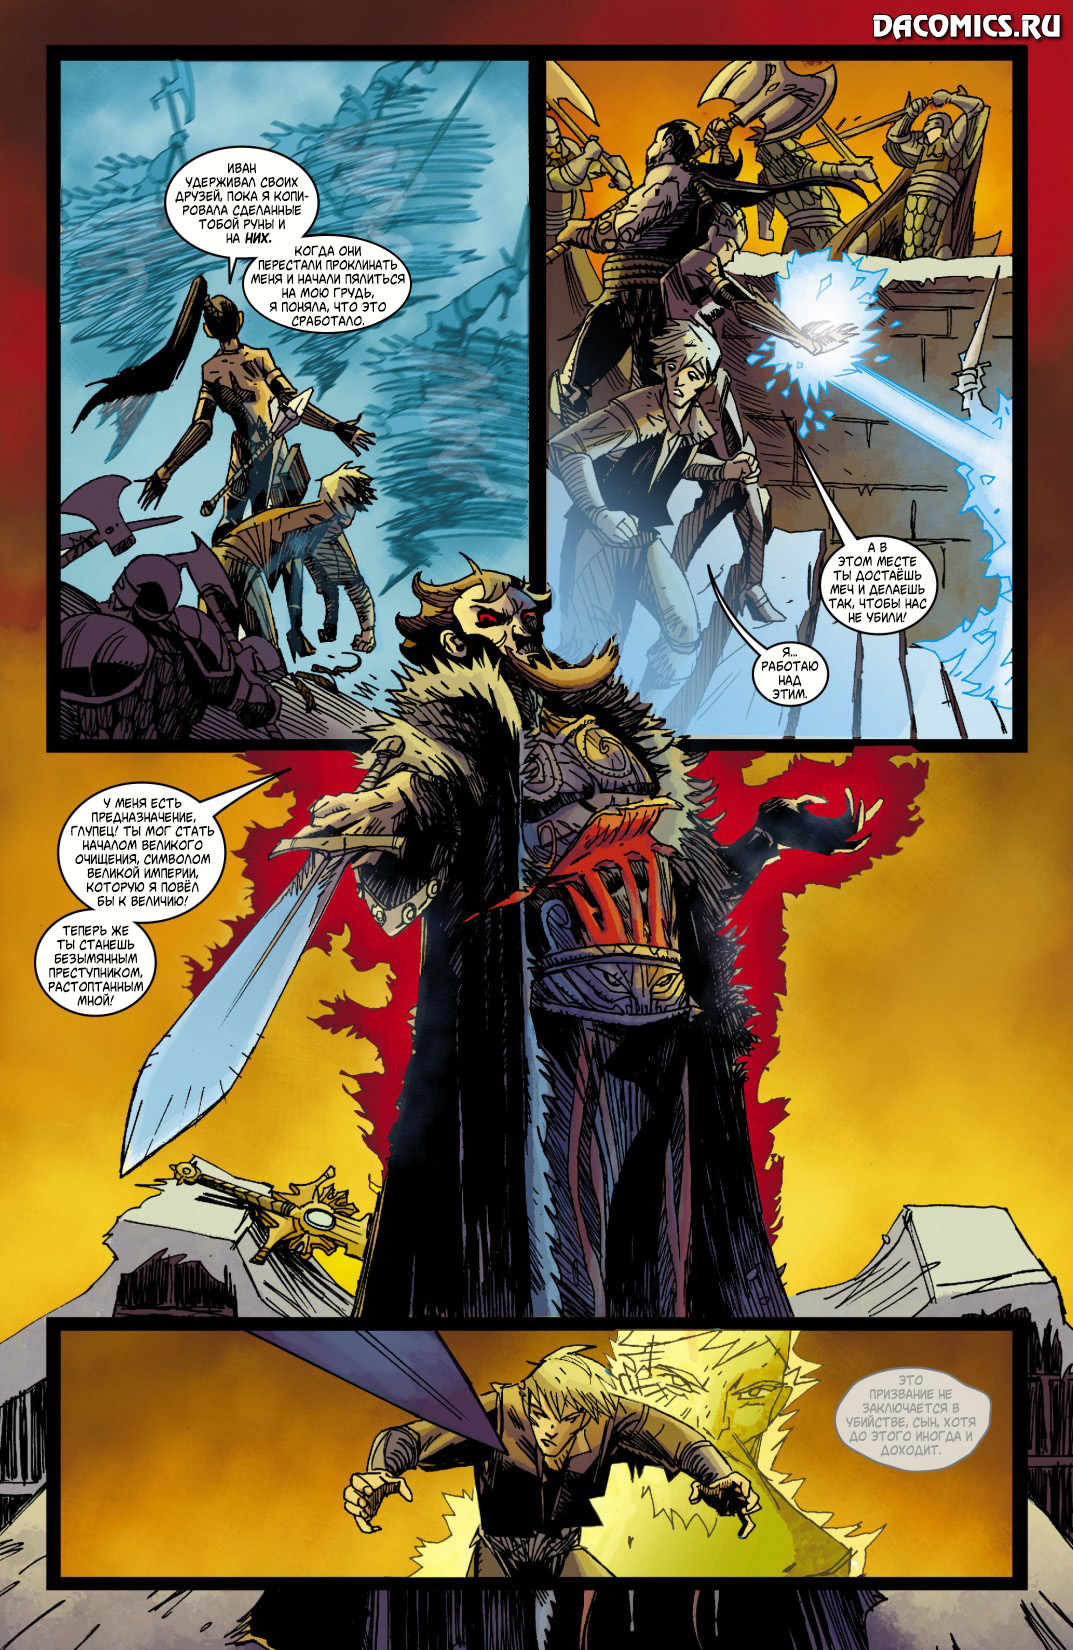 Диабло меч правосудия. Карающий меч правосудия. Меч справедливости. Diablo 3 Comics. Sword of justice